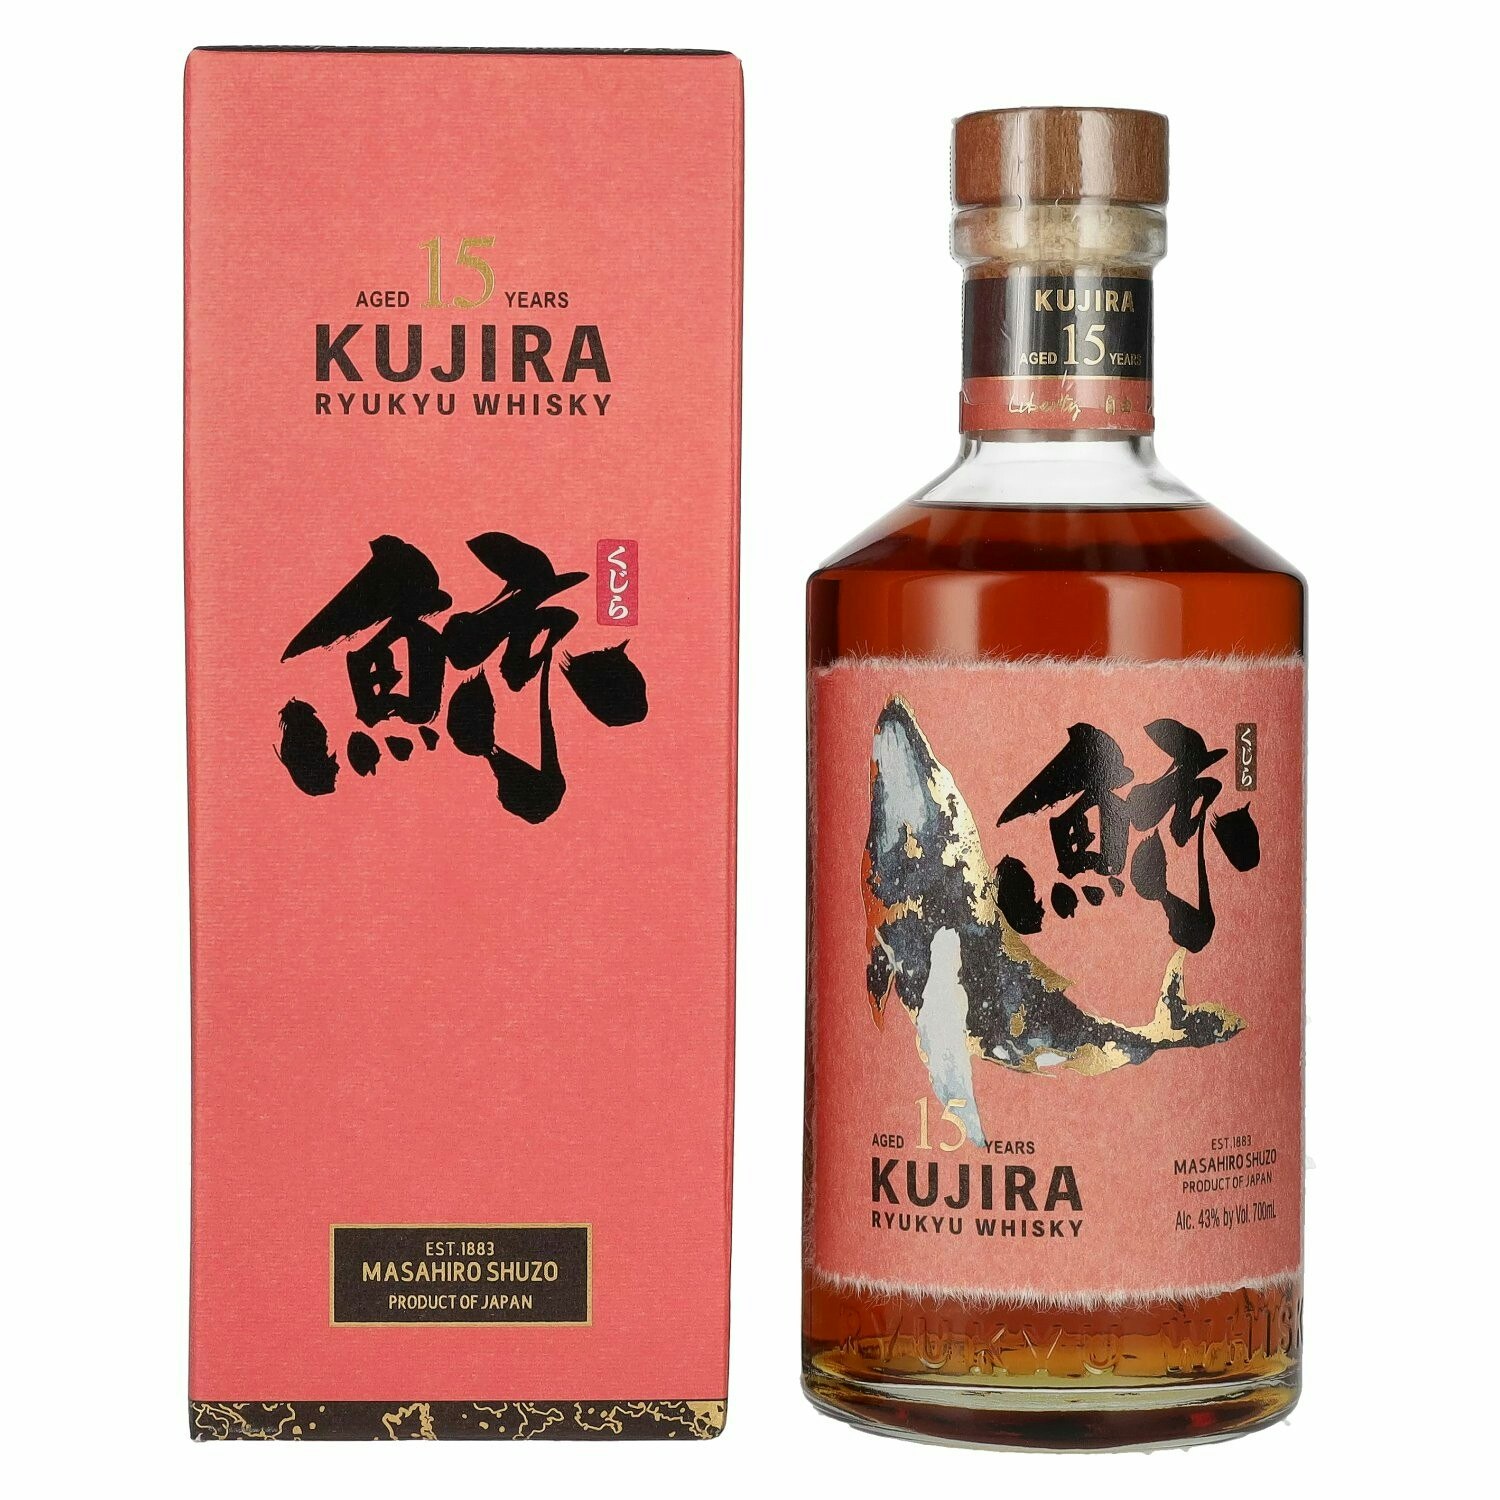 Kujira Ryukyu 15 Years Old Single Grain Whisky 43% Vol. 0,7l in Giftbox